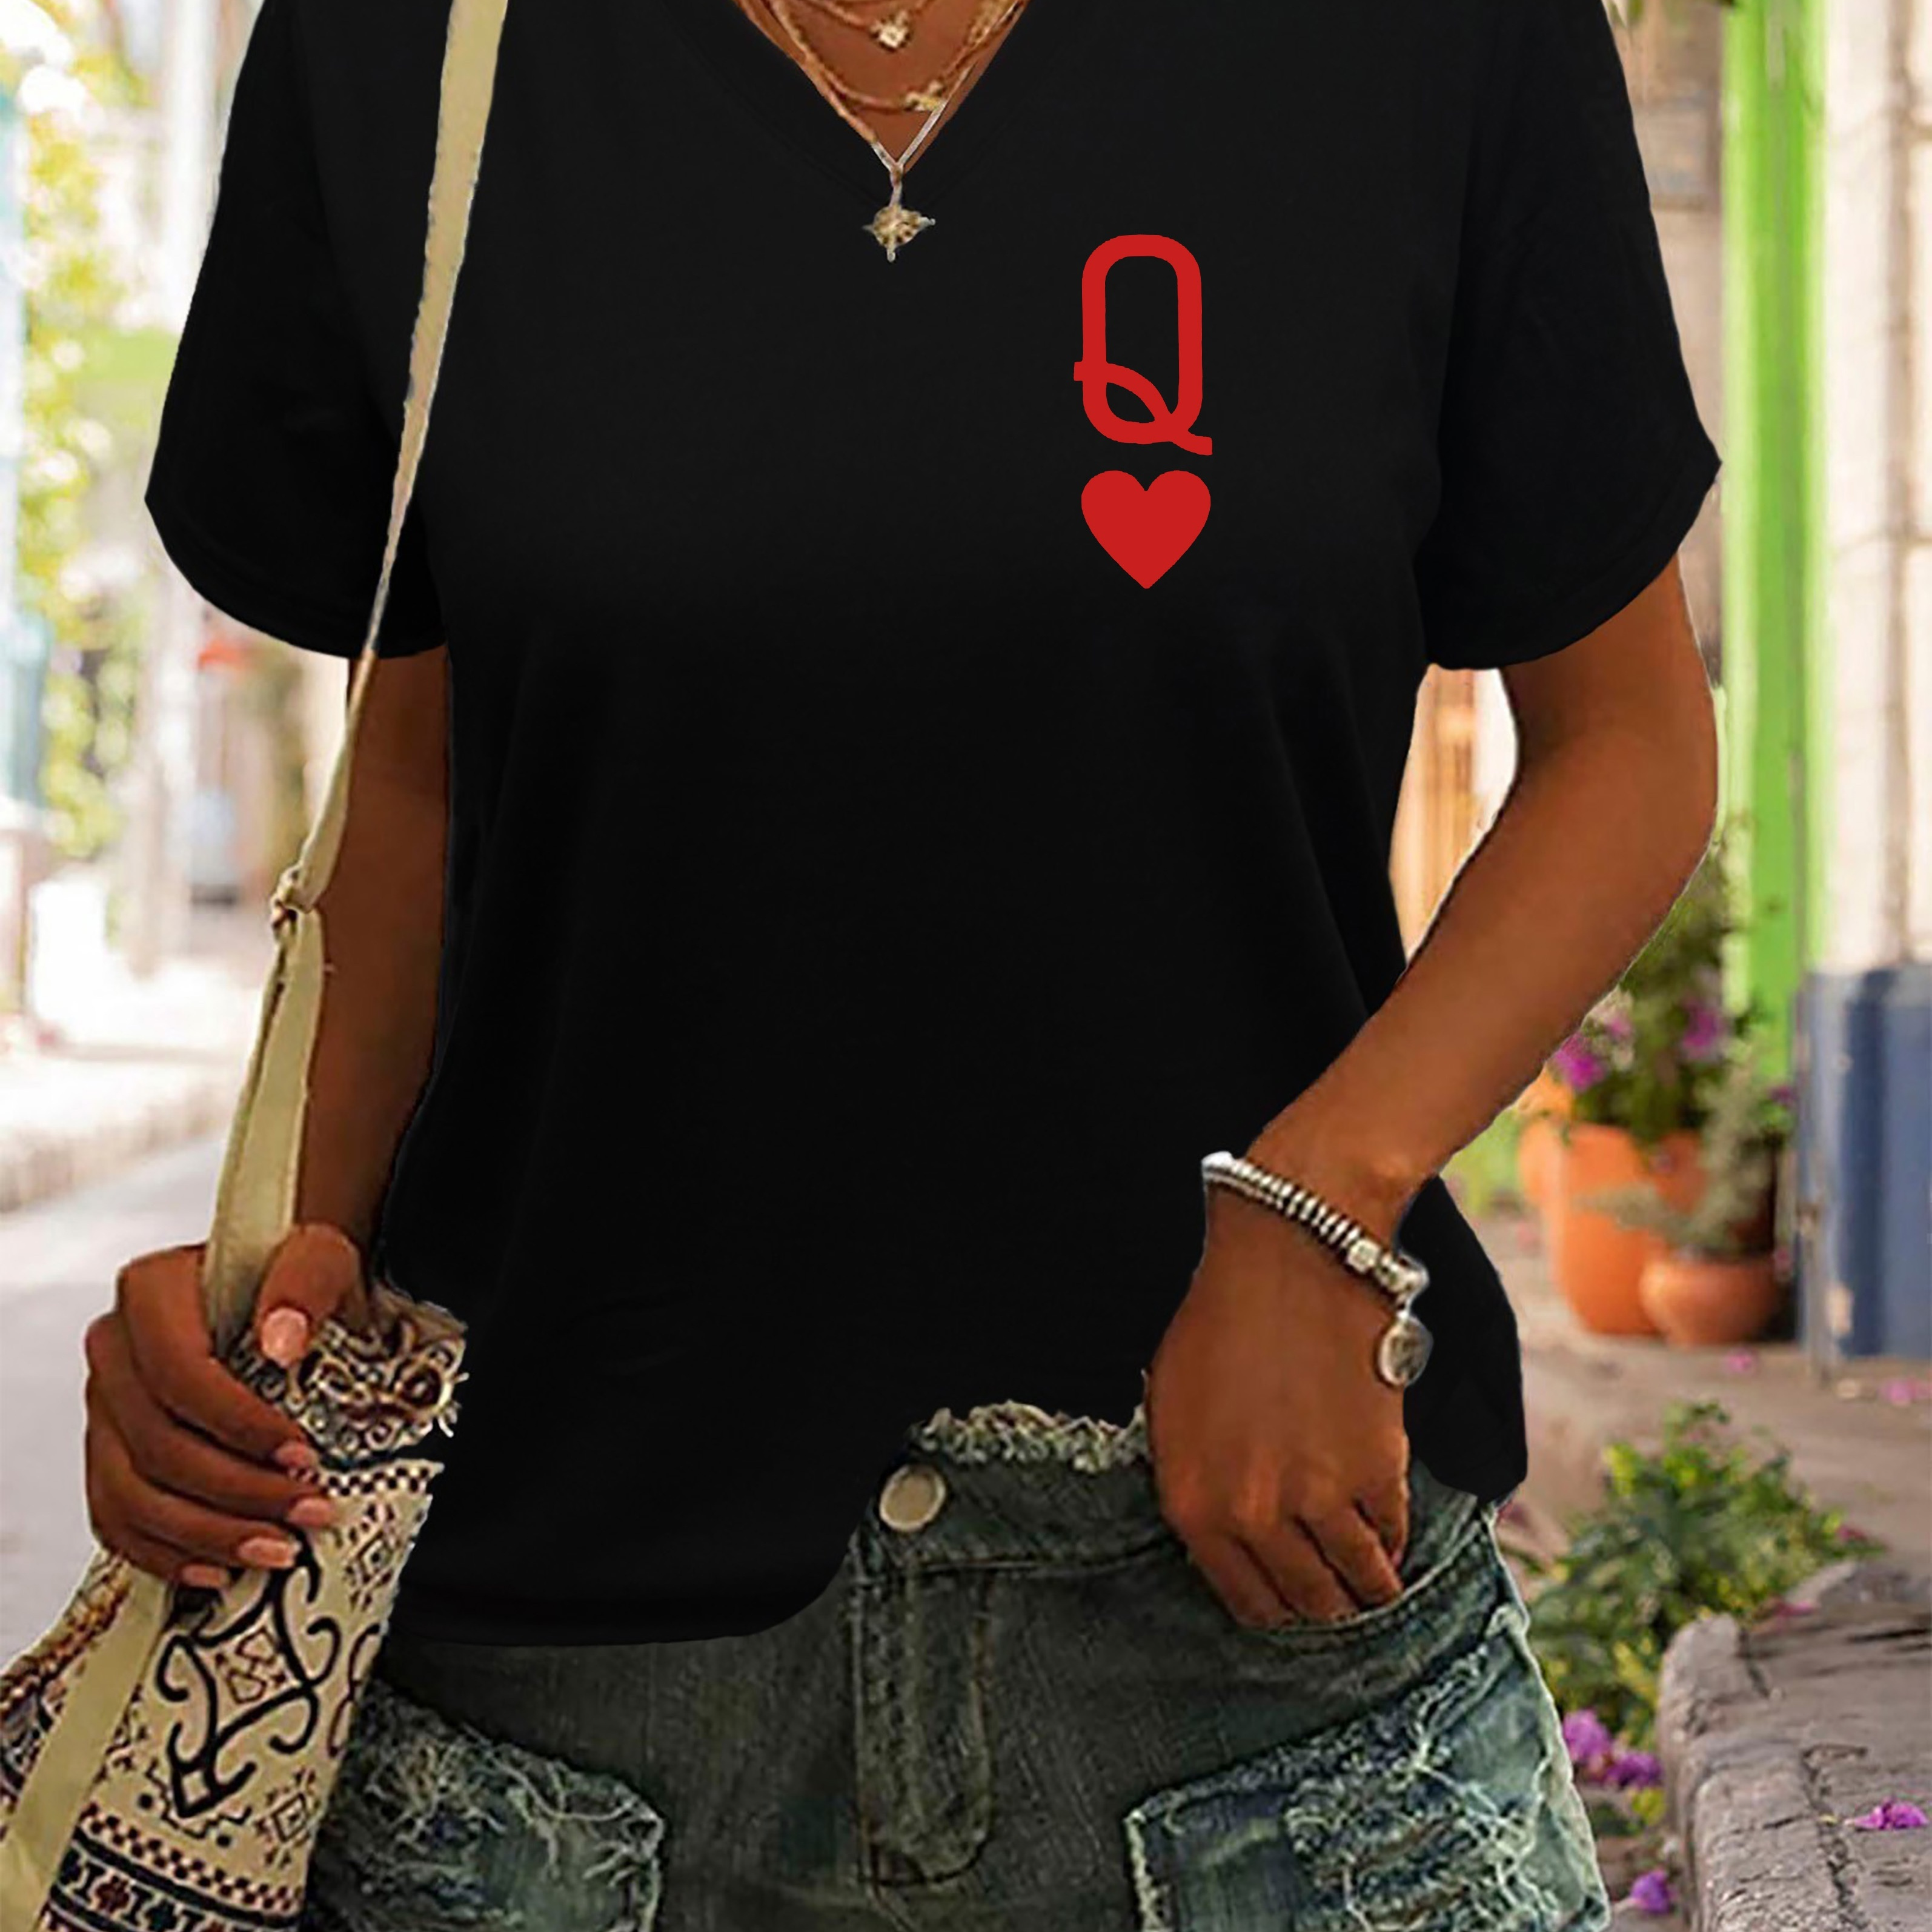 

Q & Heart Print T-shirt, Short Sleeve V Neck Casual Top For Summer & Spring, Women's Clothing